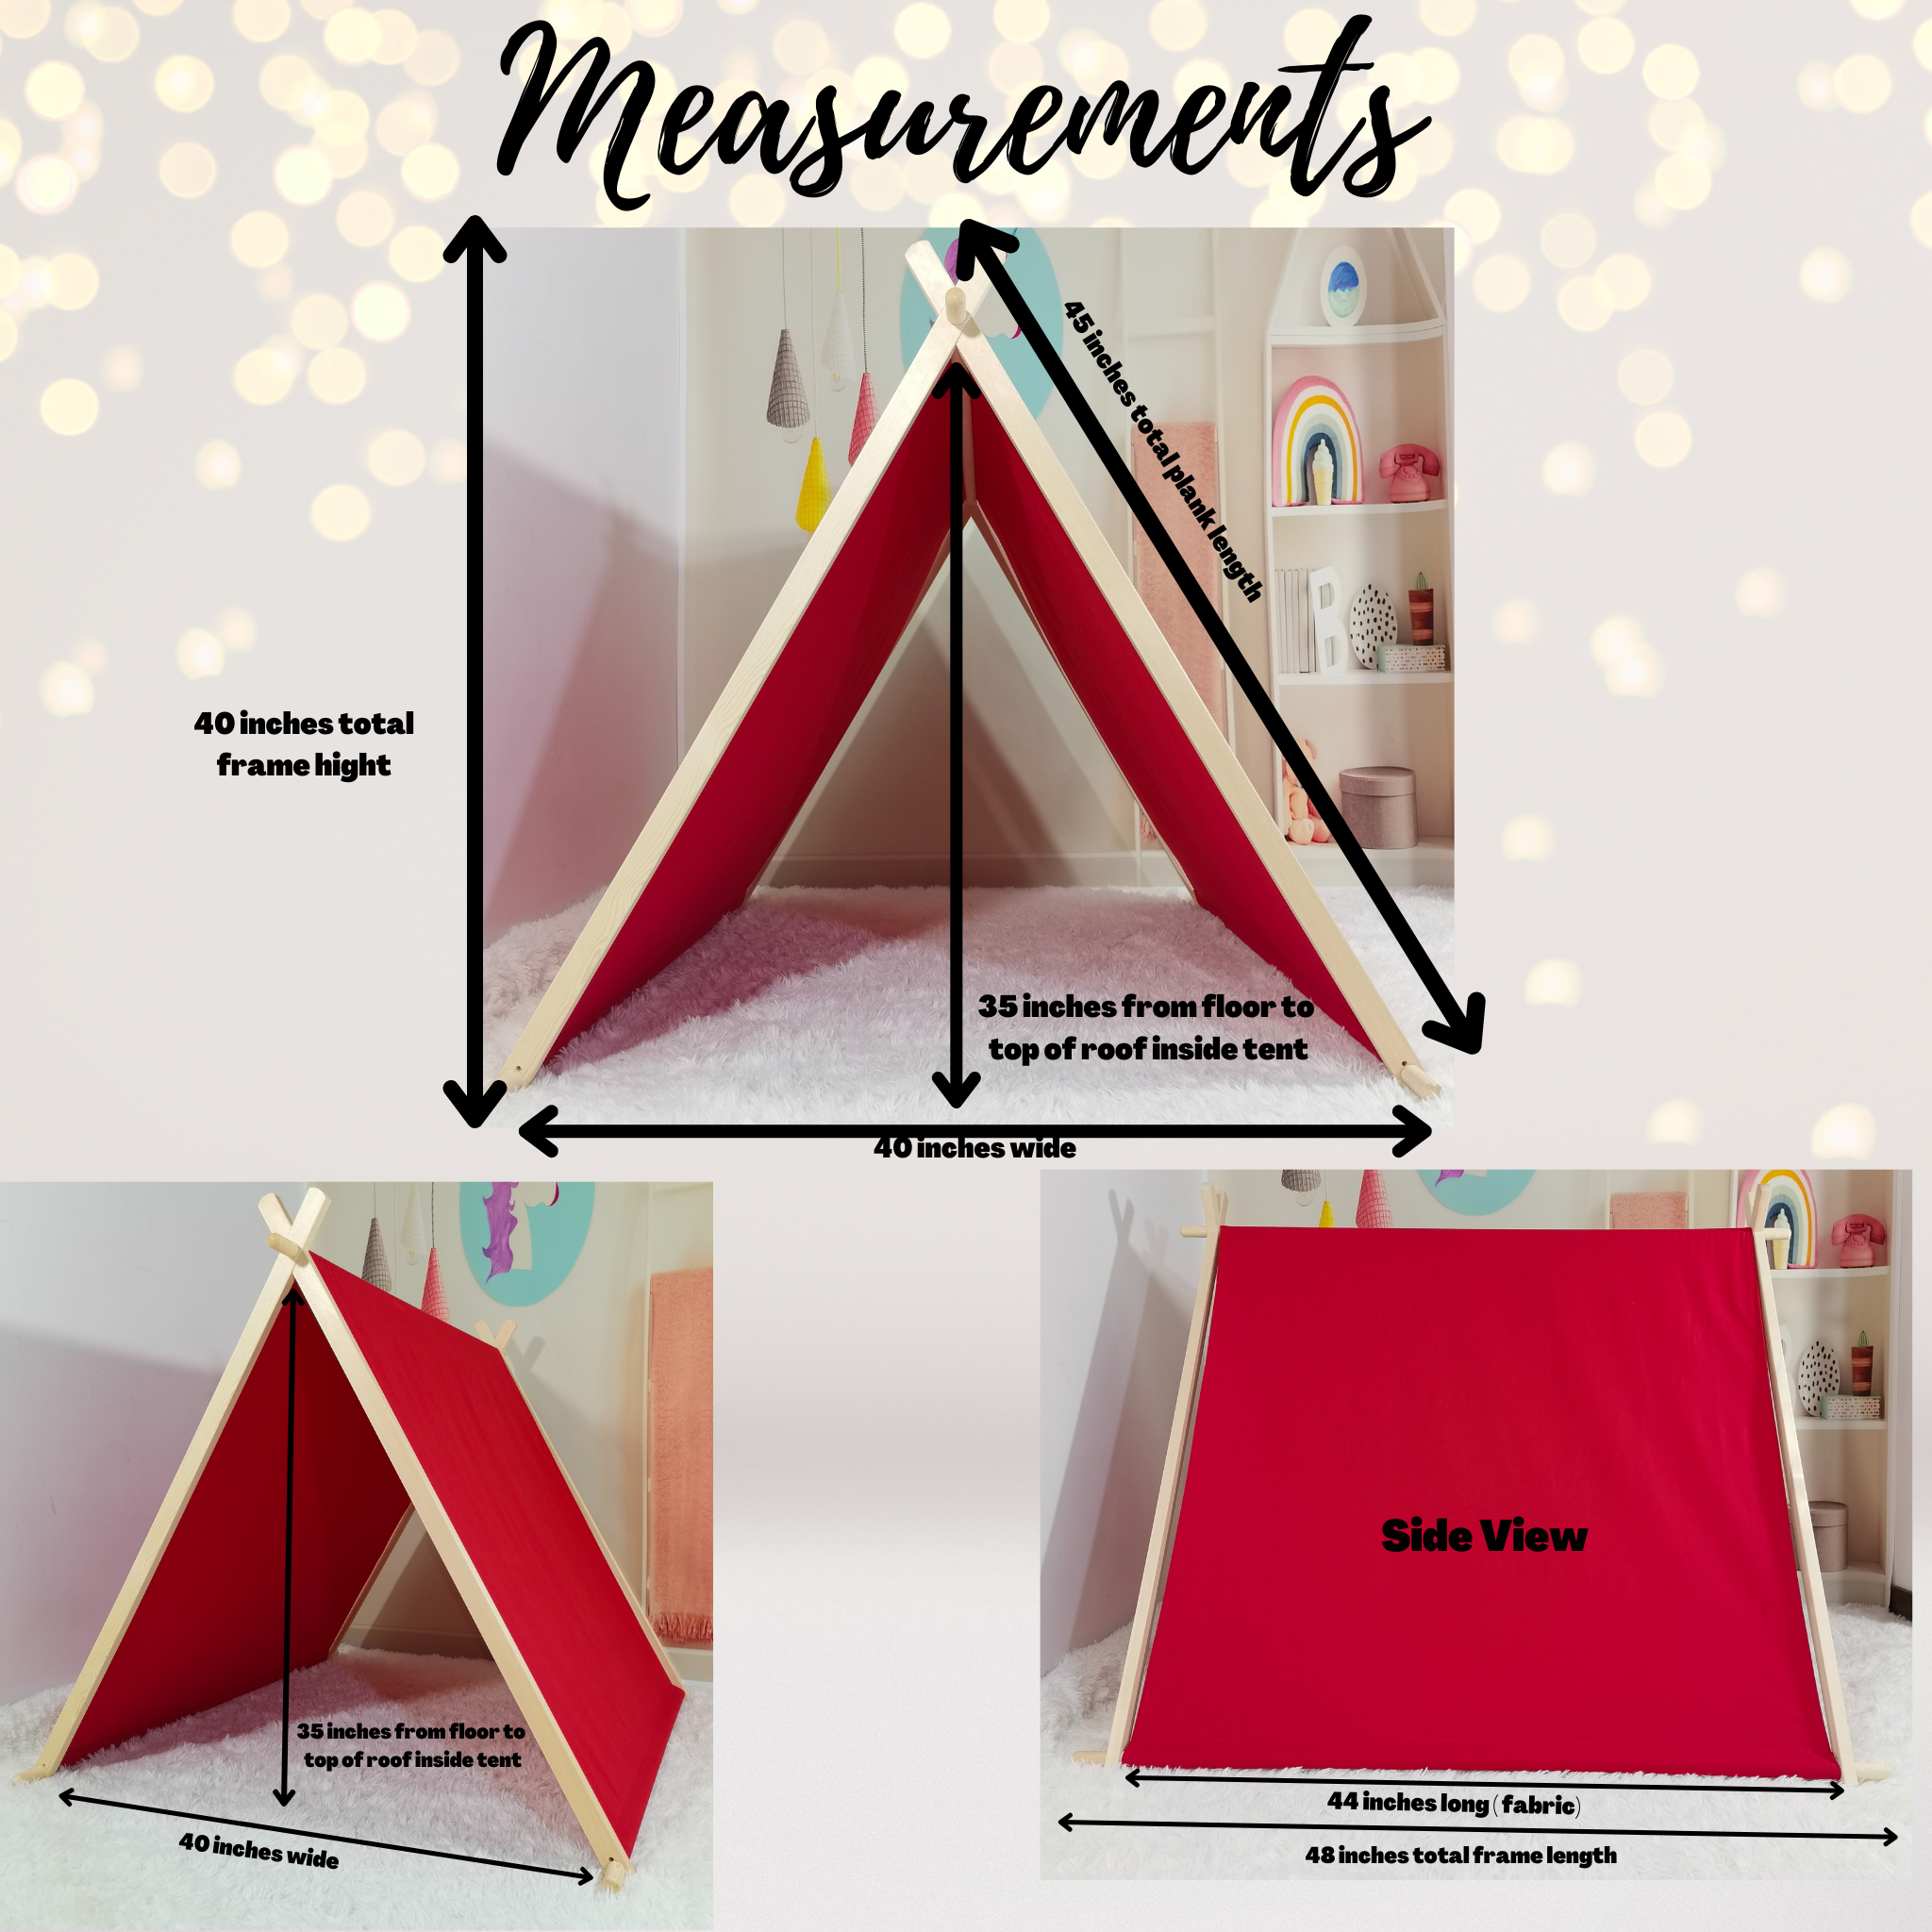 Christmas gnome sleepover tent dimensions inc